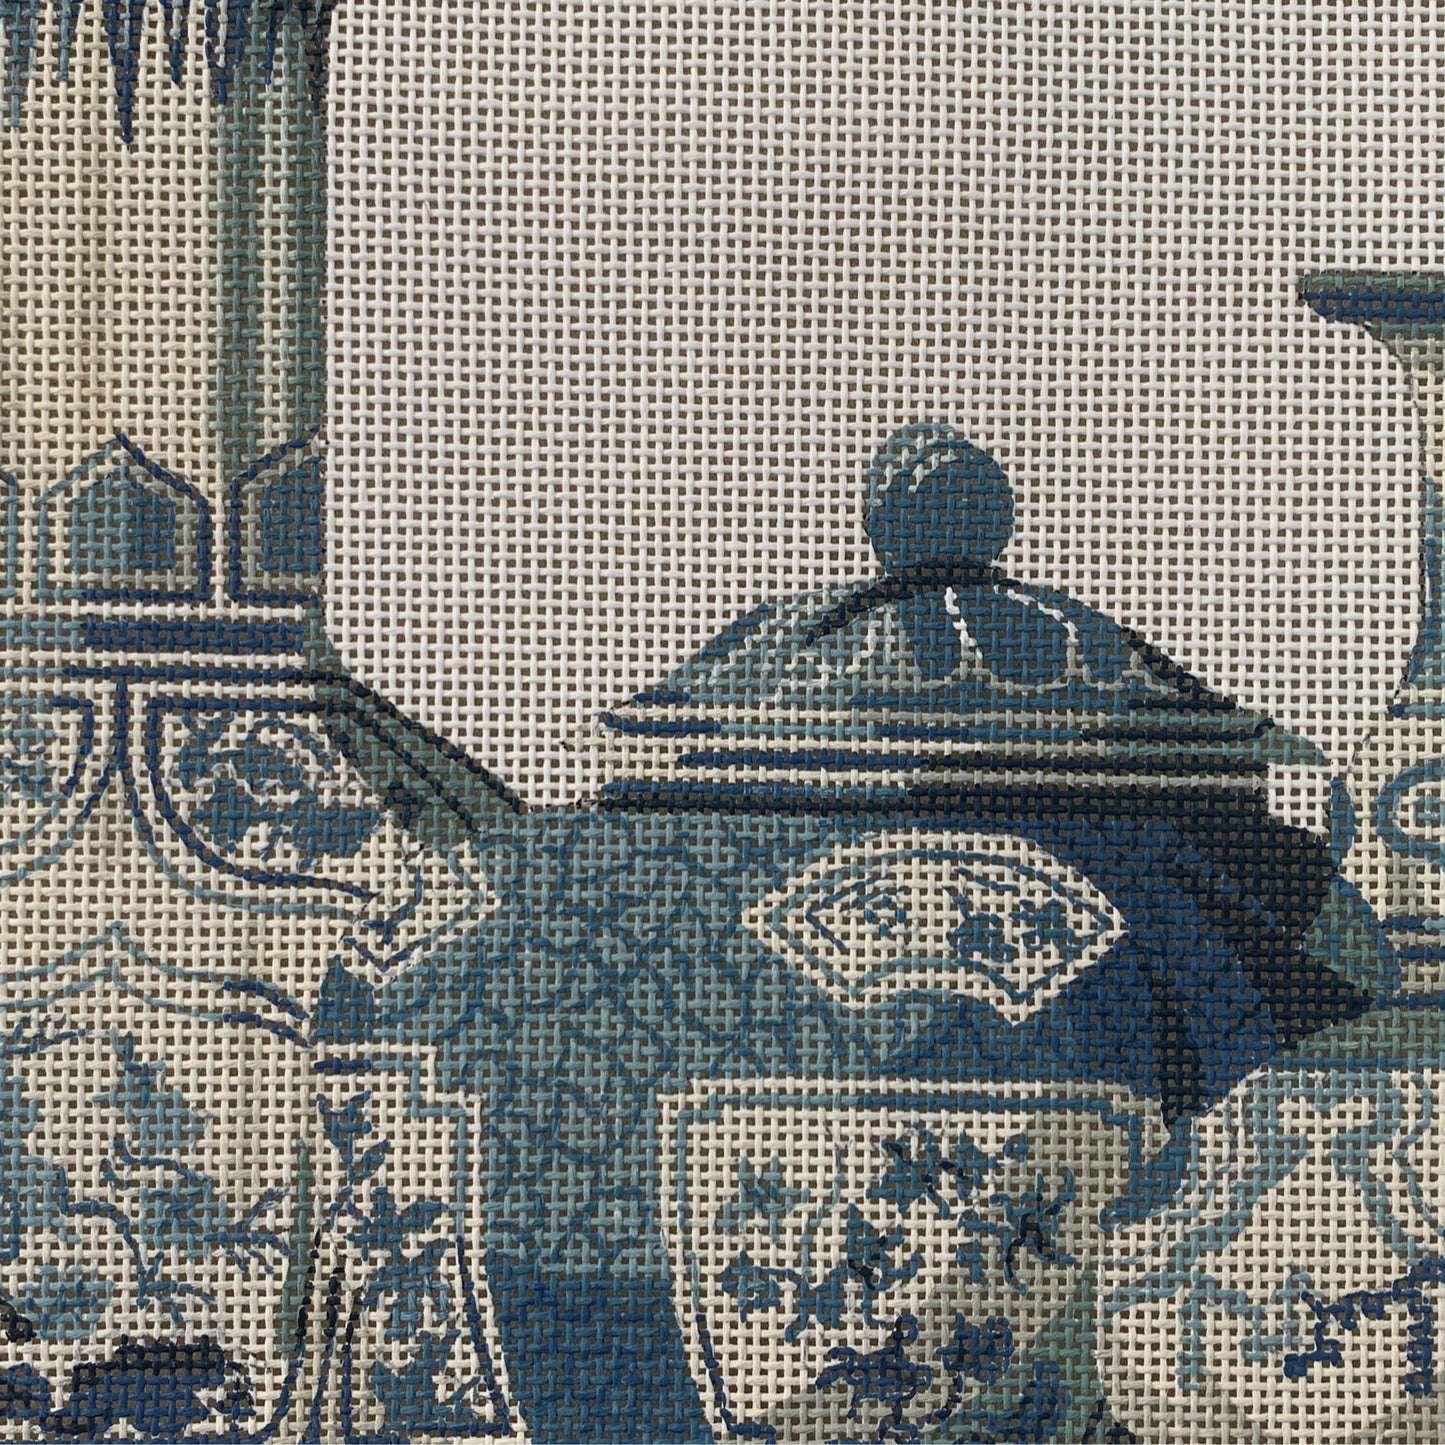 Blue and White Vases 3 Needlecraft Canvas